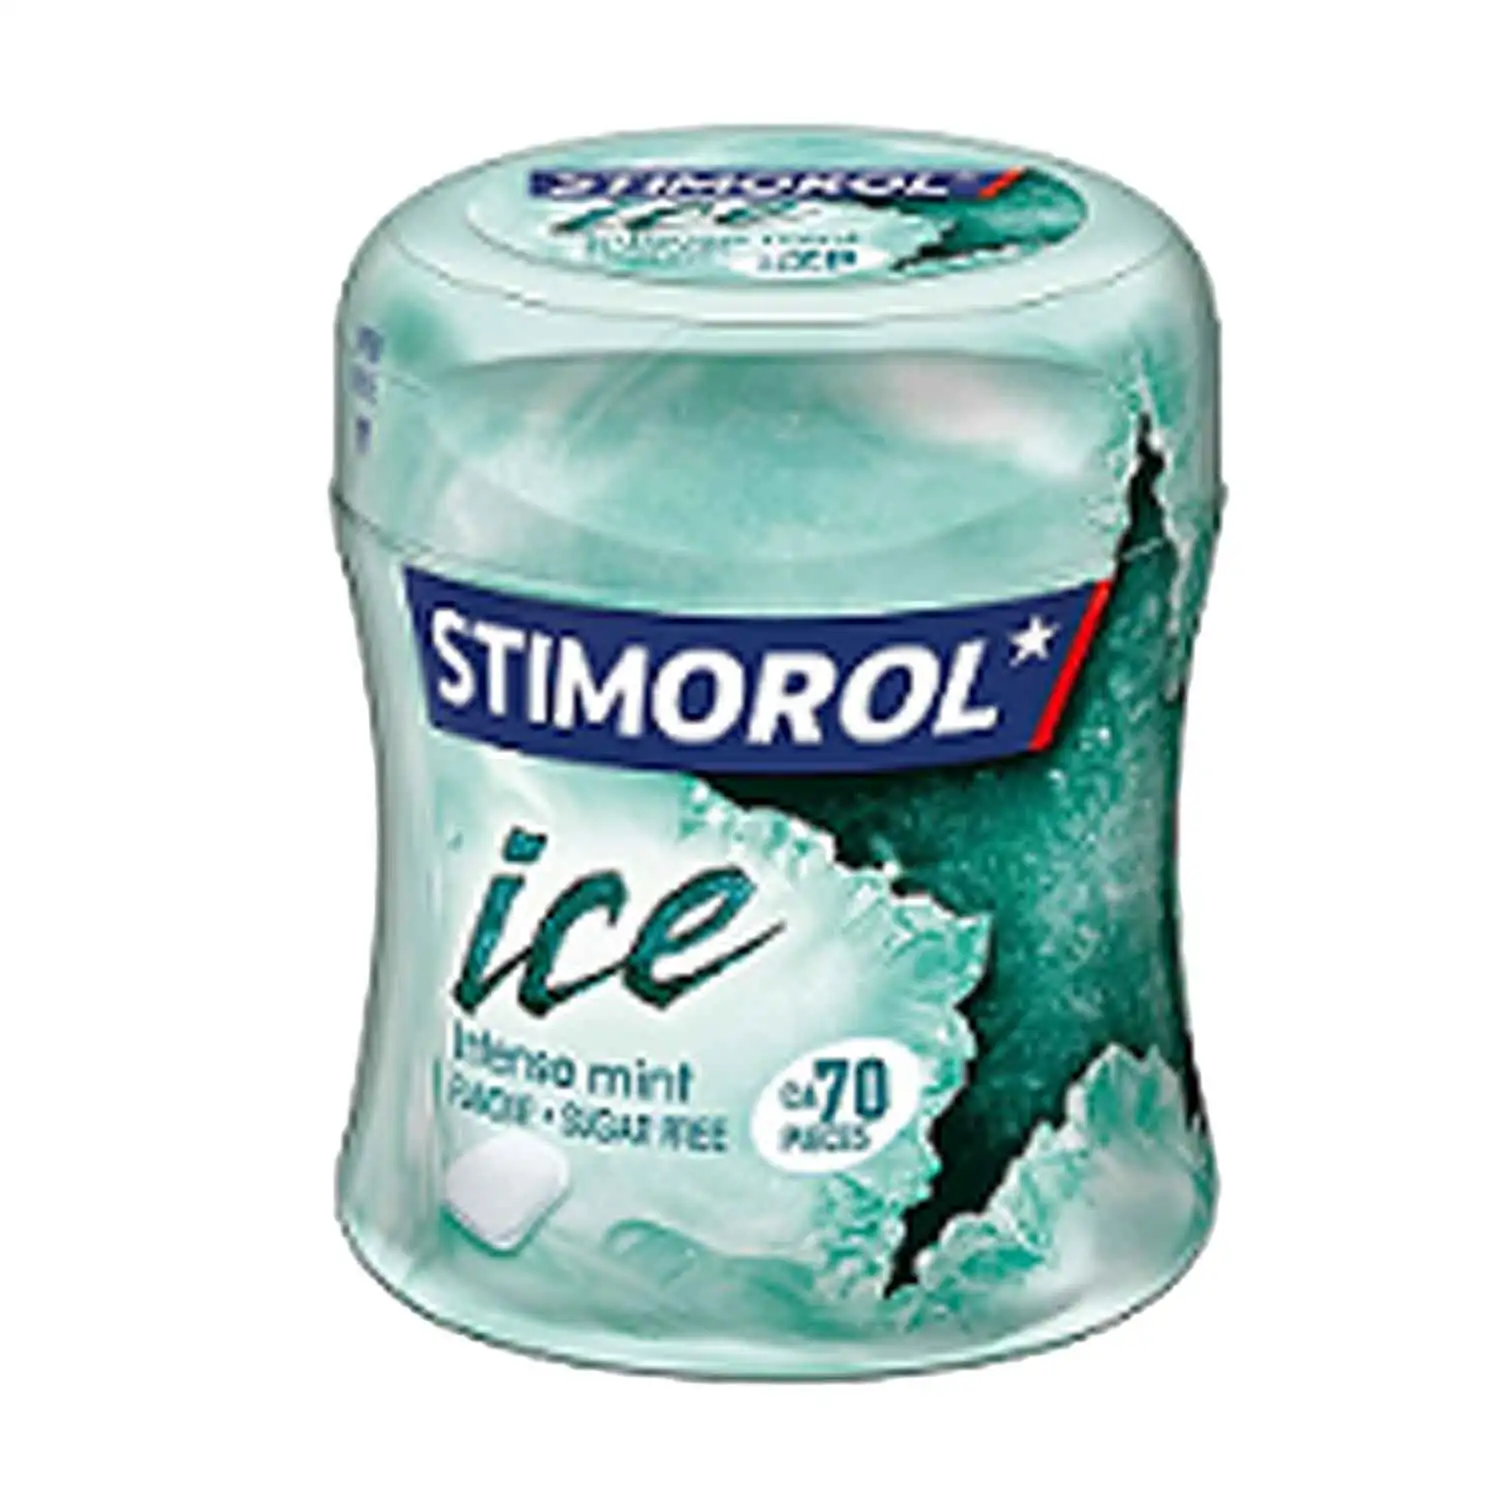 Stimorol ice intense mint 80g - Buy at Real Tobacco